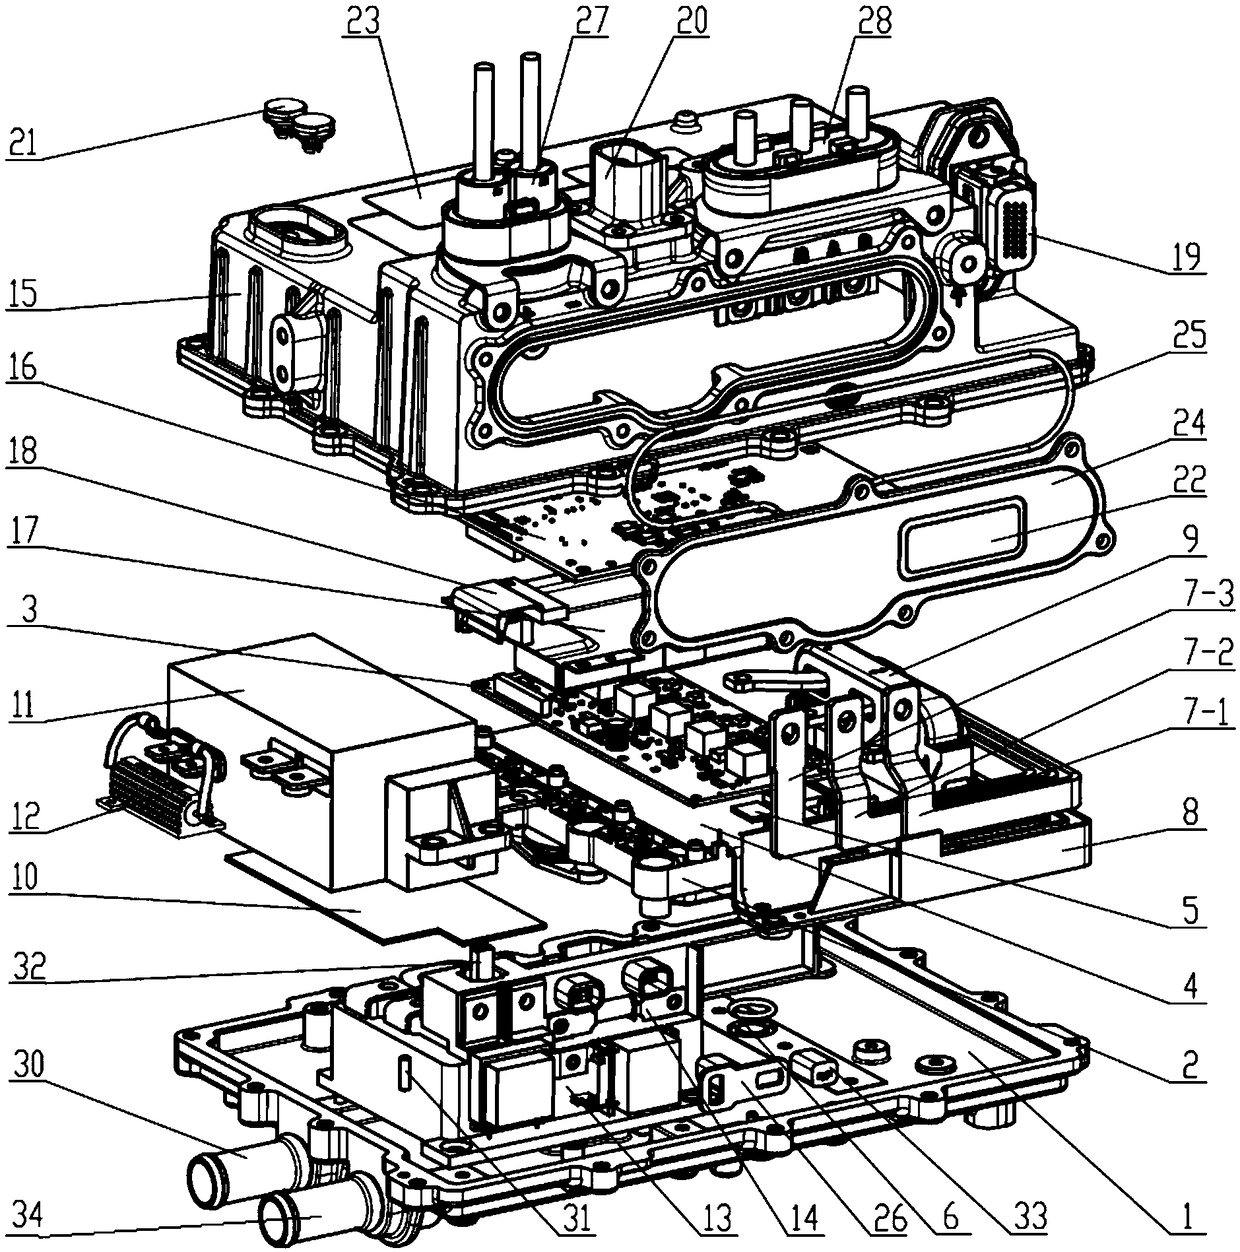 Single-motor inverter assembly